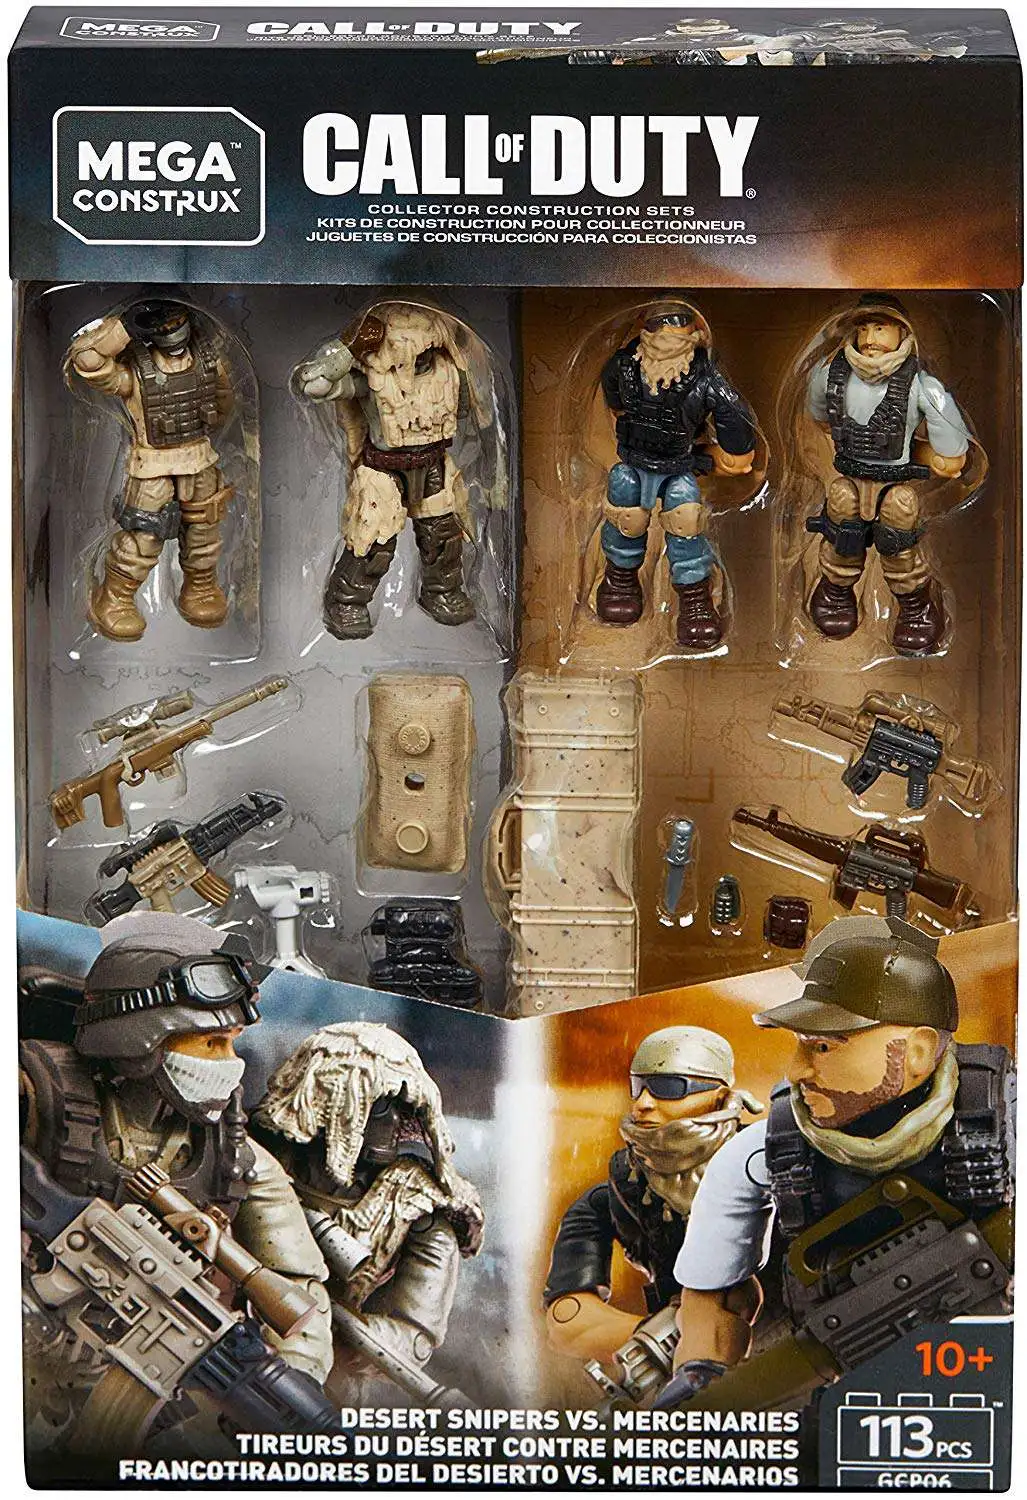 MEGA Construx Call of Duty Desert Snipers VS Mercenaries 113 Pcs GCP06 for sale online 